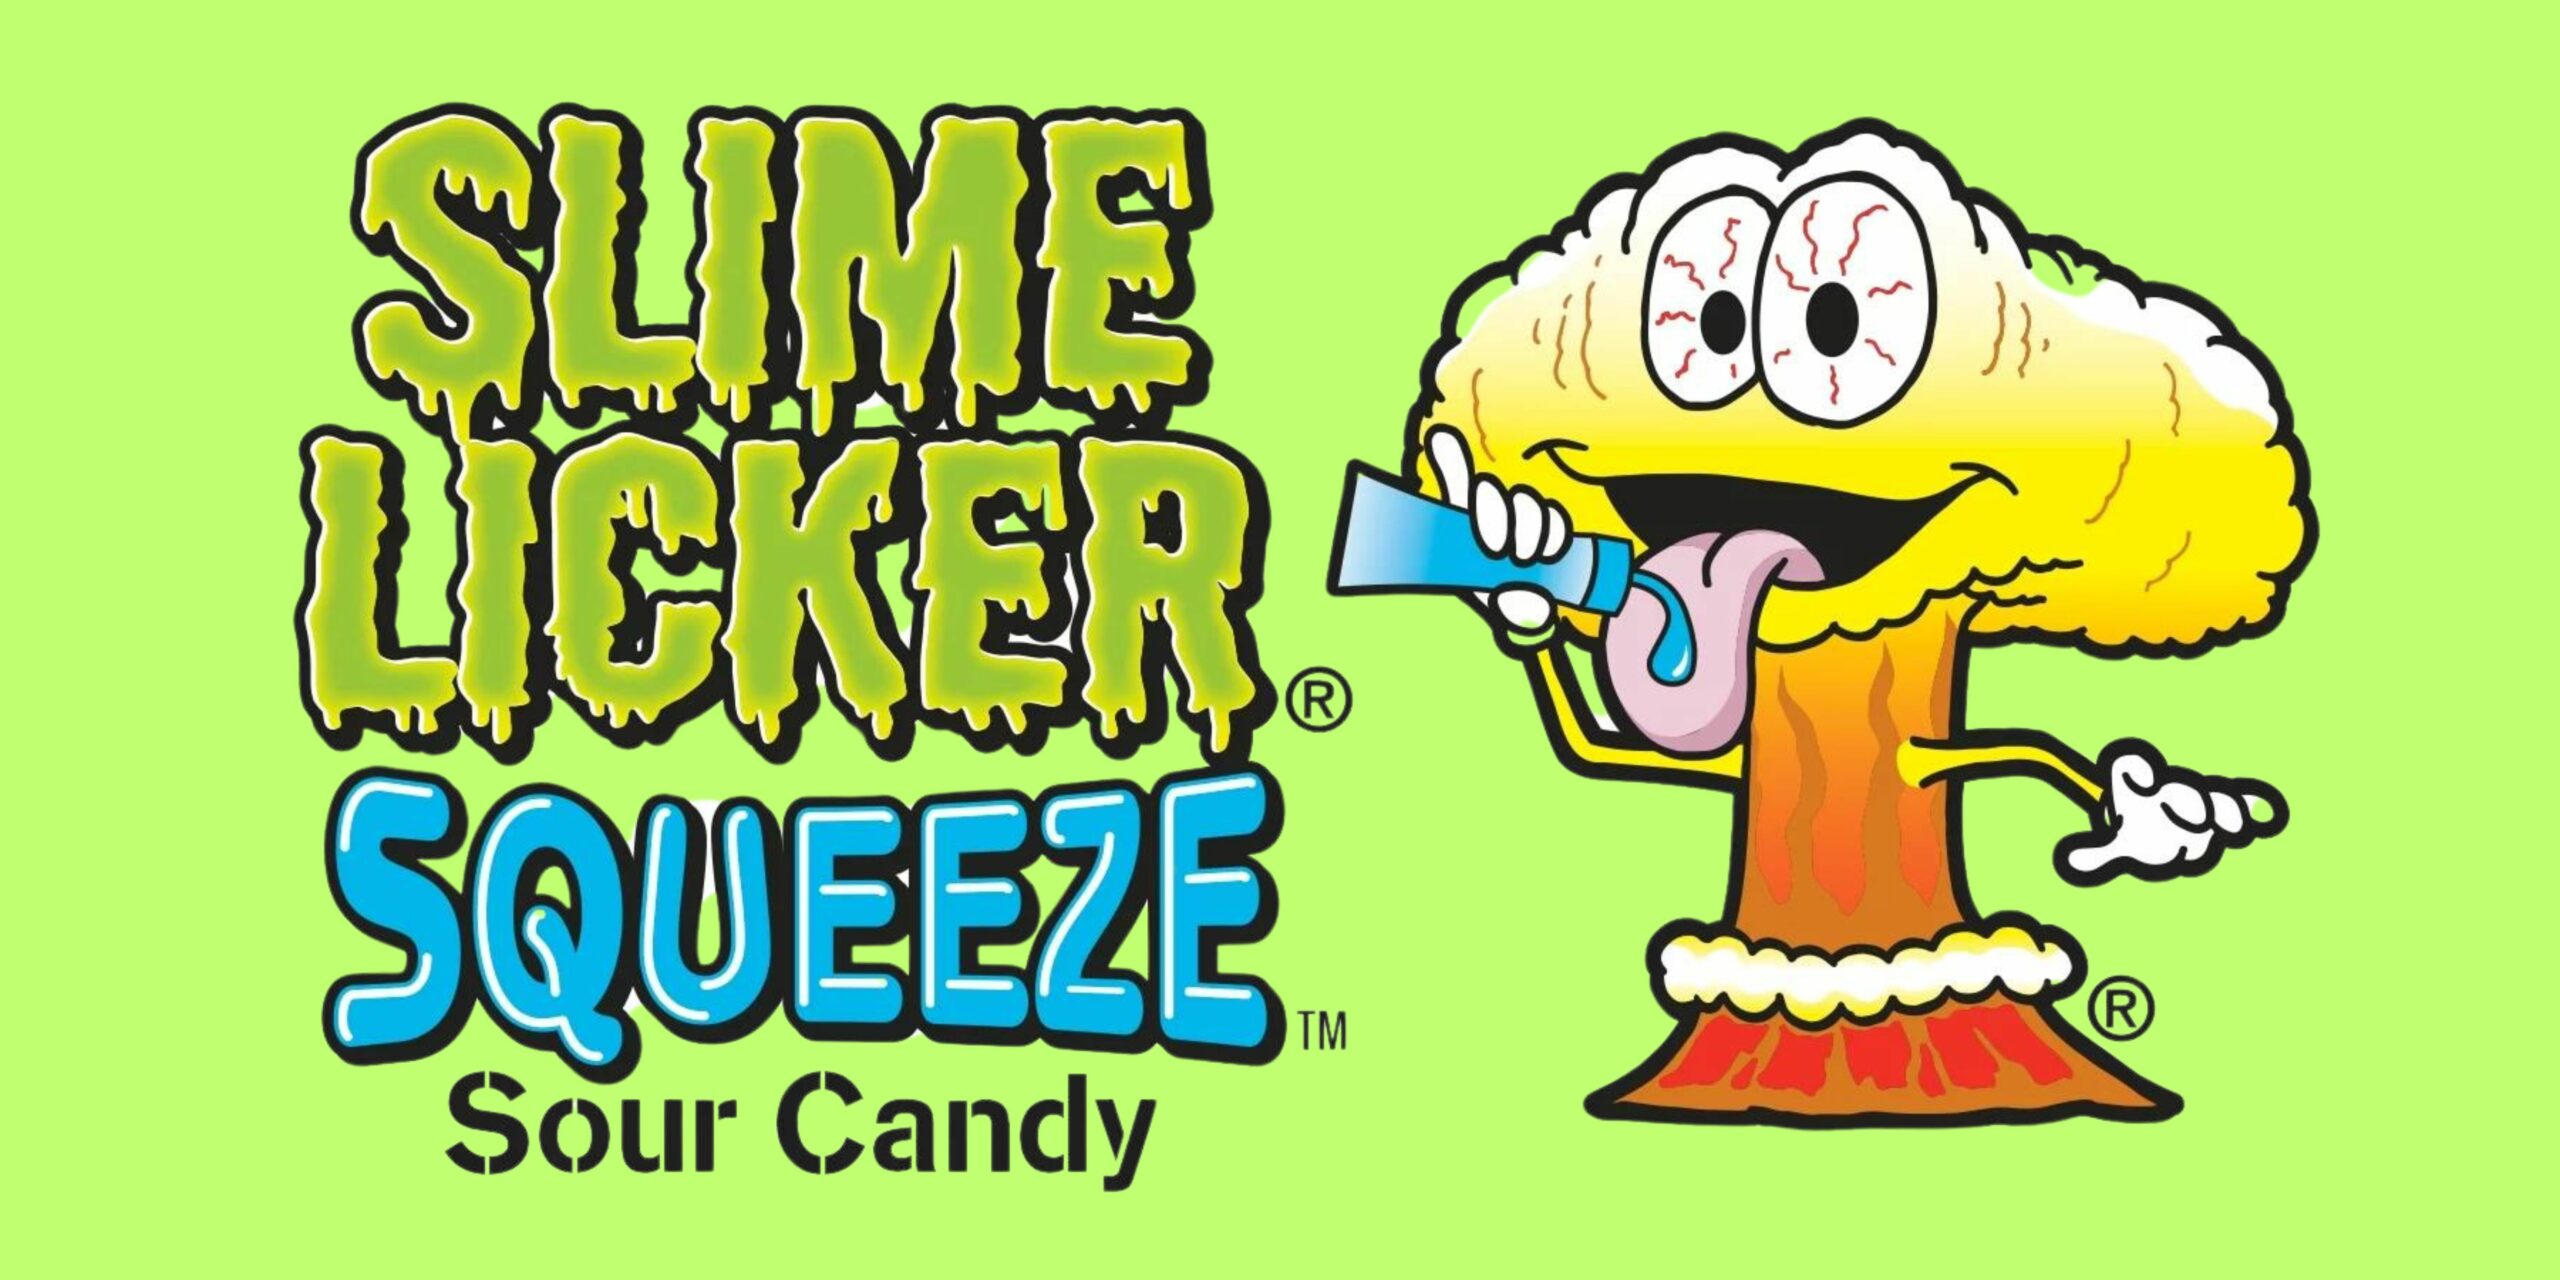 Toxic Waste Slime Licker Squeeze – Cherry 70G AMERICAN SNACKS - XMANIA Ireland 14